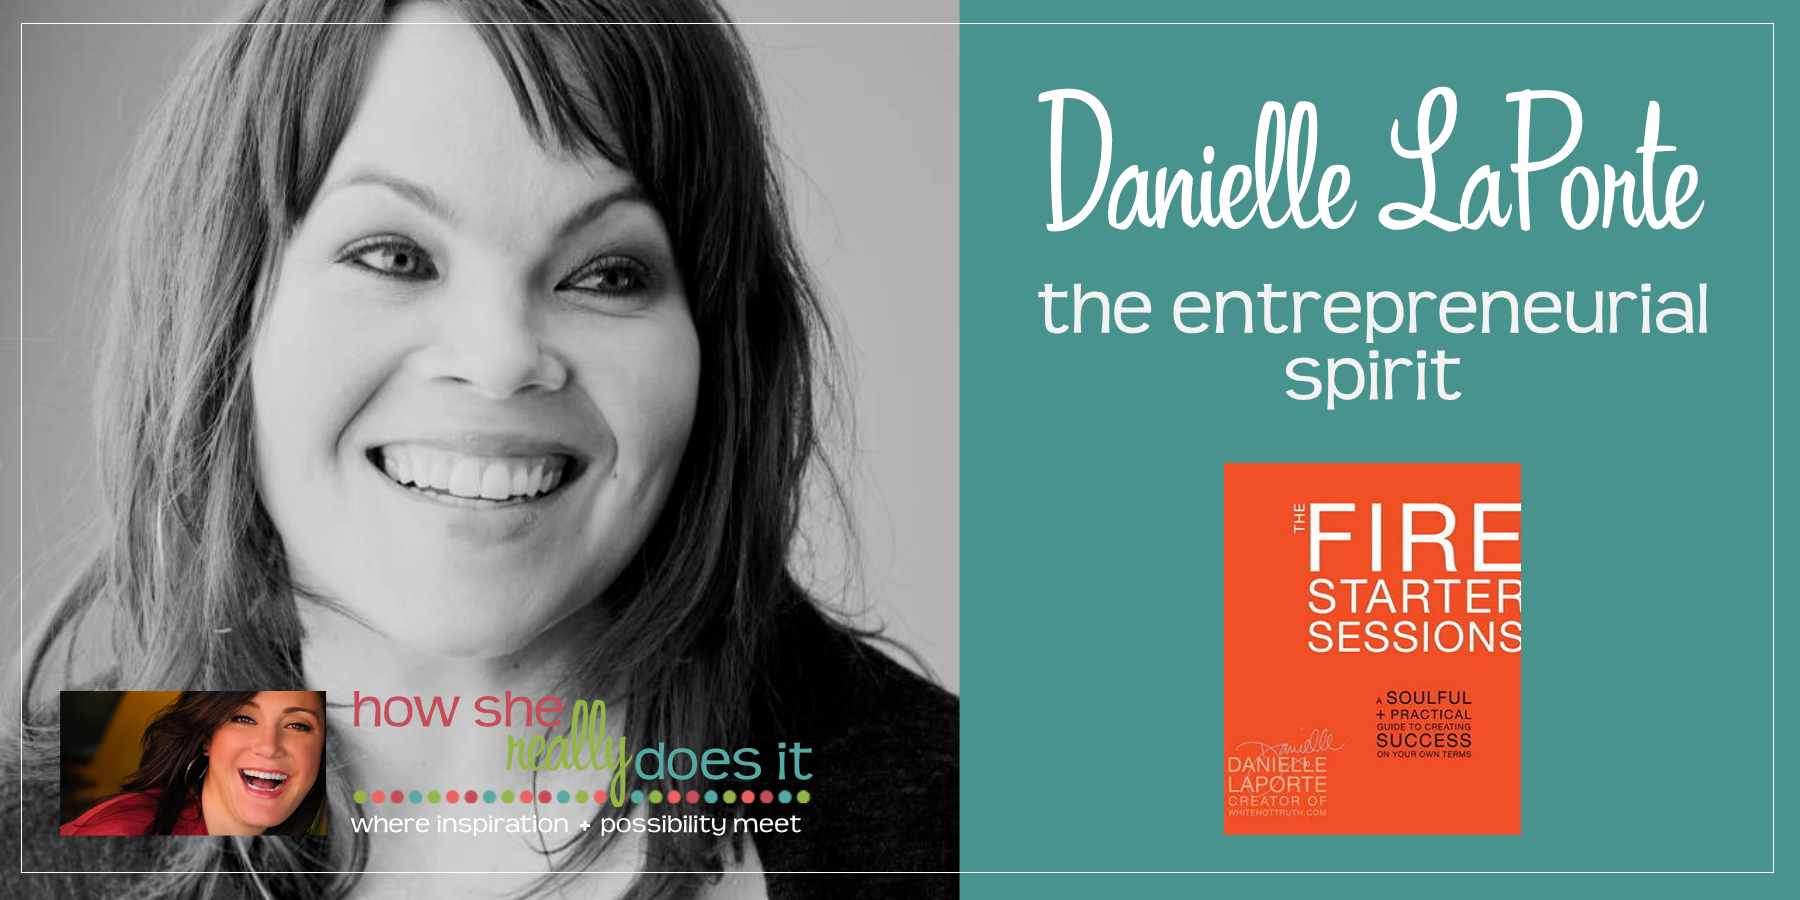 Danielle LaPorte: The entrepreneurial spirit